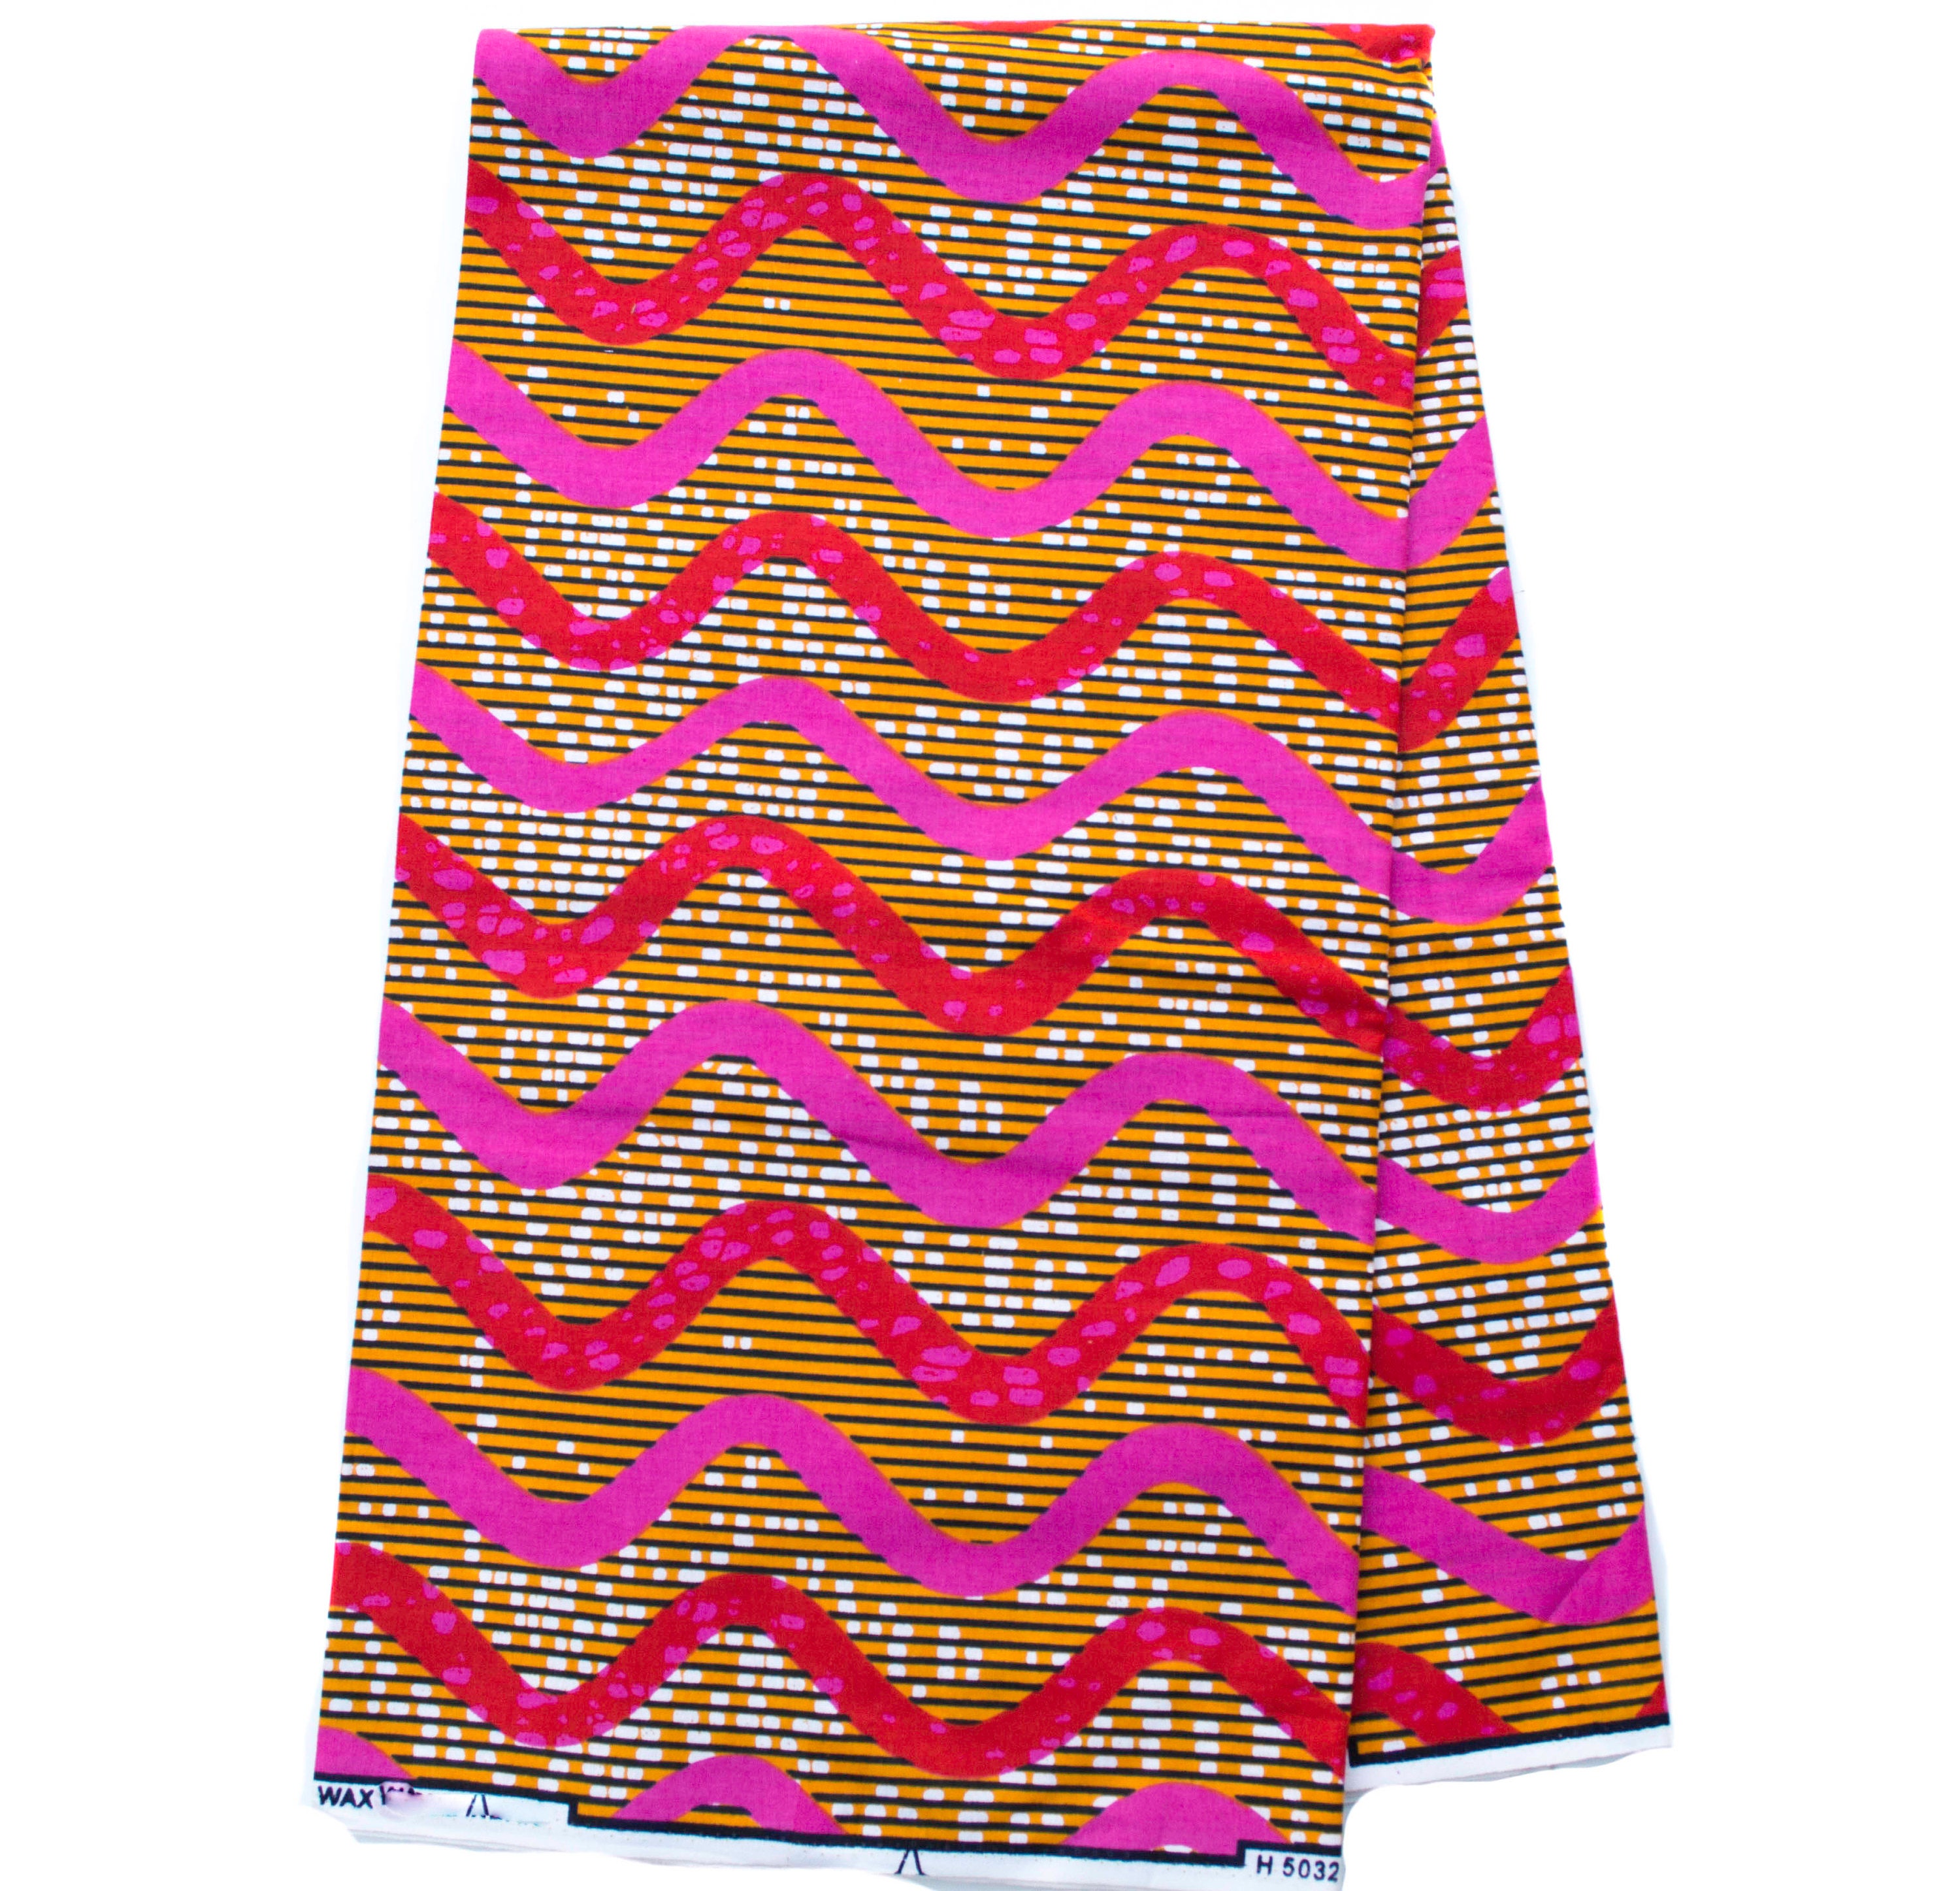 WP1806 African Print Fabric Bundles, Ankara Quilt 5 Pieces of 1